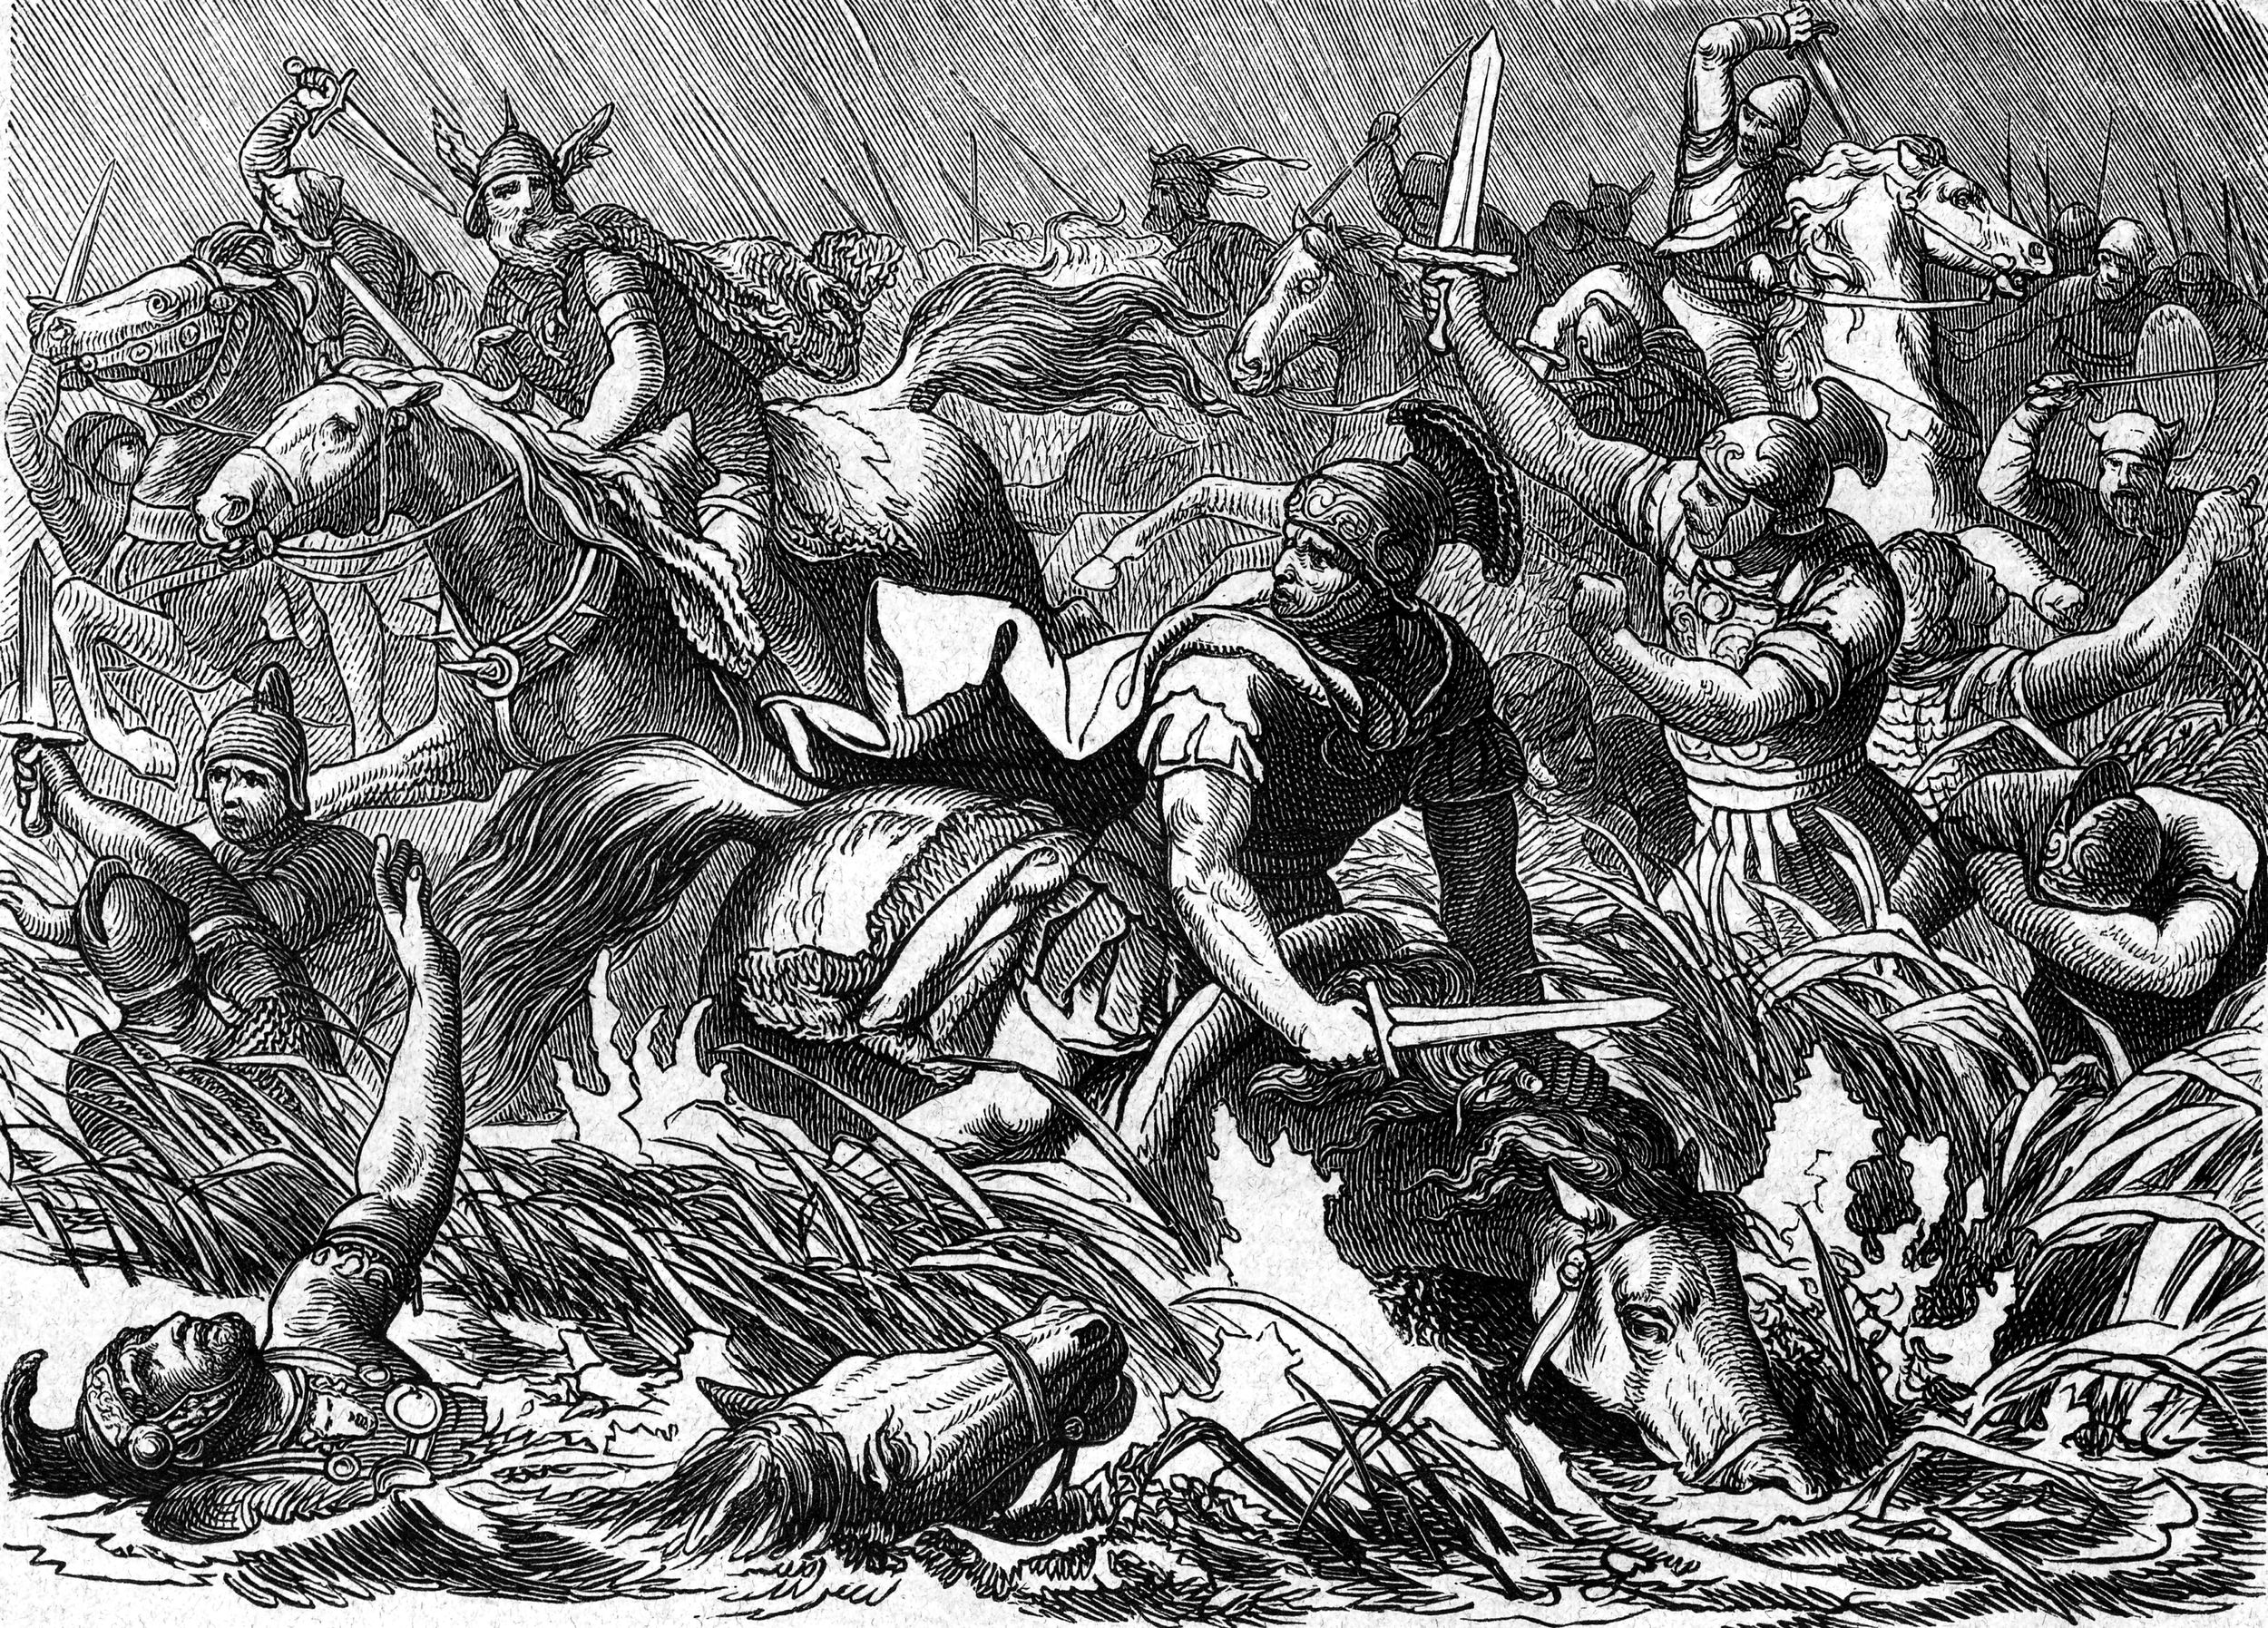 Roman Emperor Decius falls in battle after leading his men into a quagmire while pursuing Goth tribesmen in ad 251.